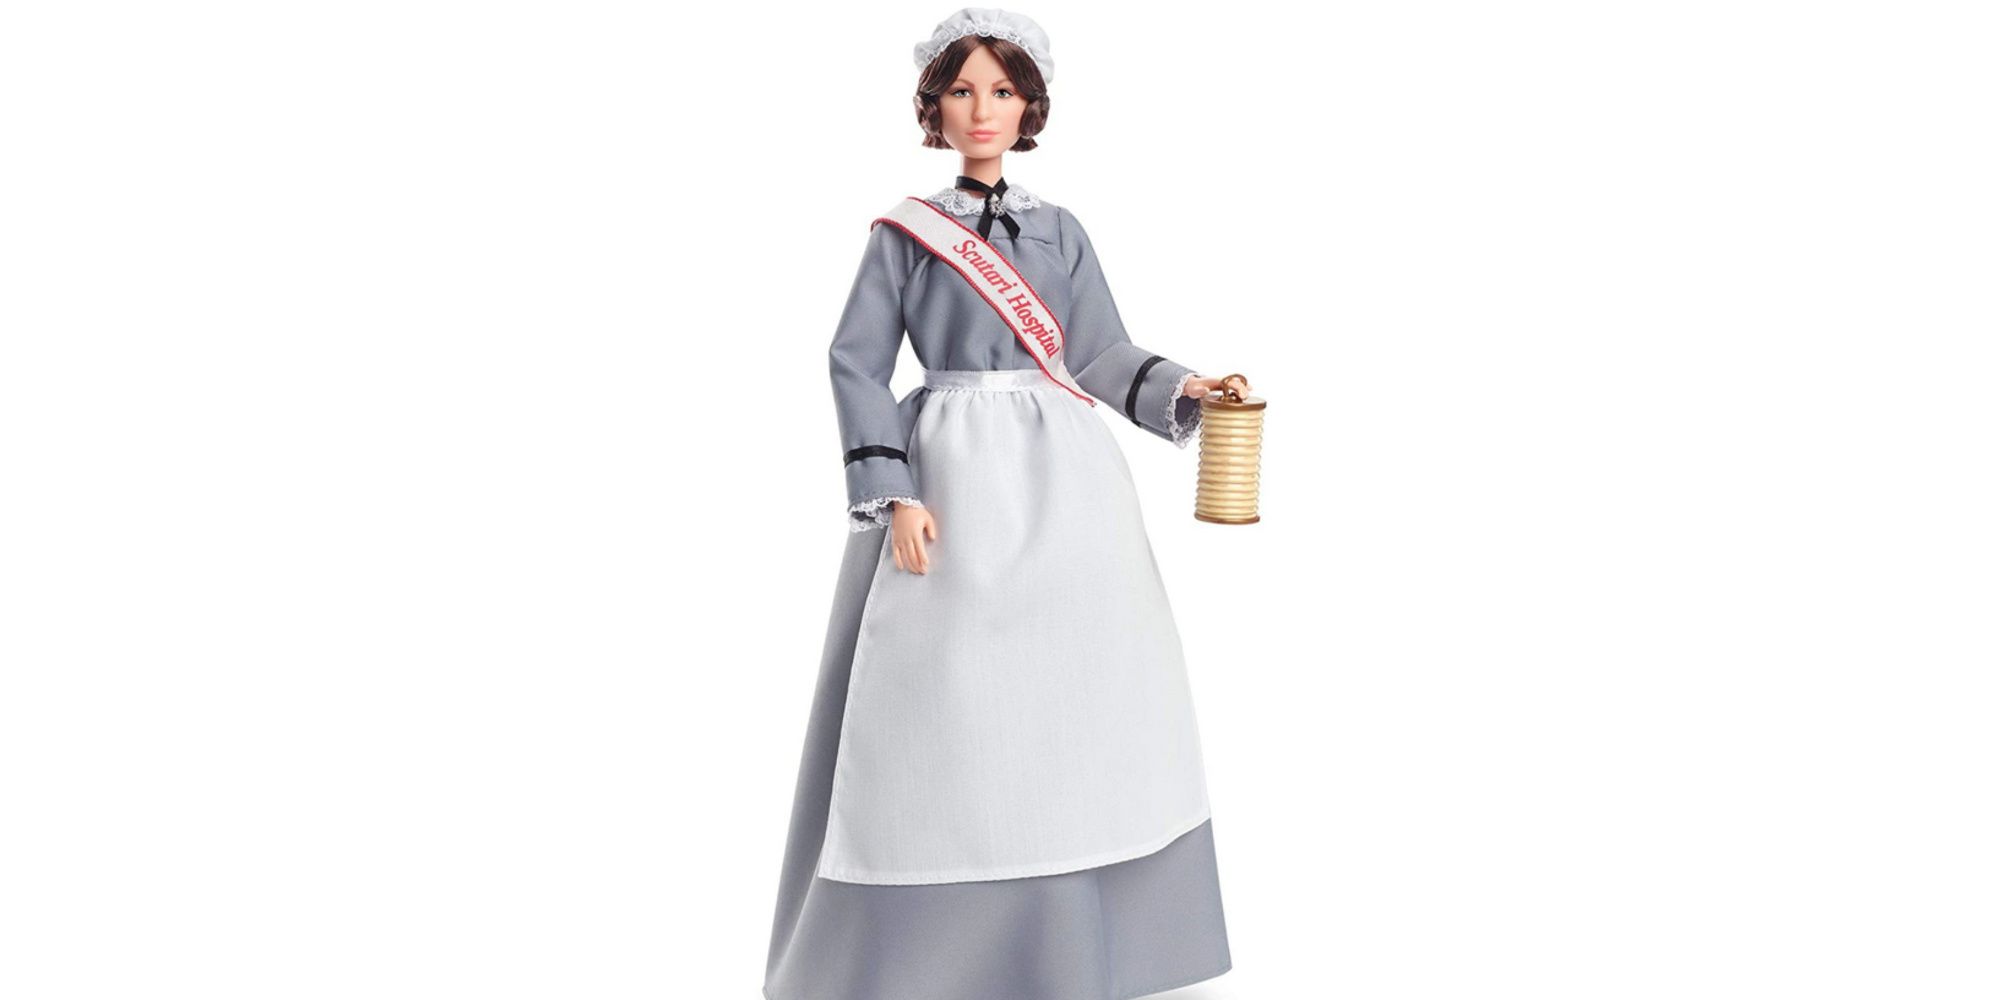 Barbie Inspirational Woman series Florence Nightingale doll